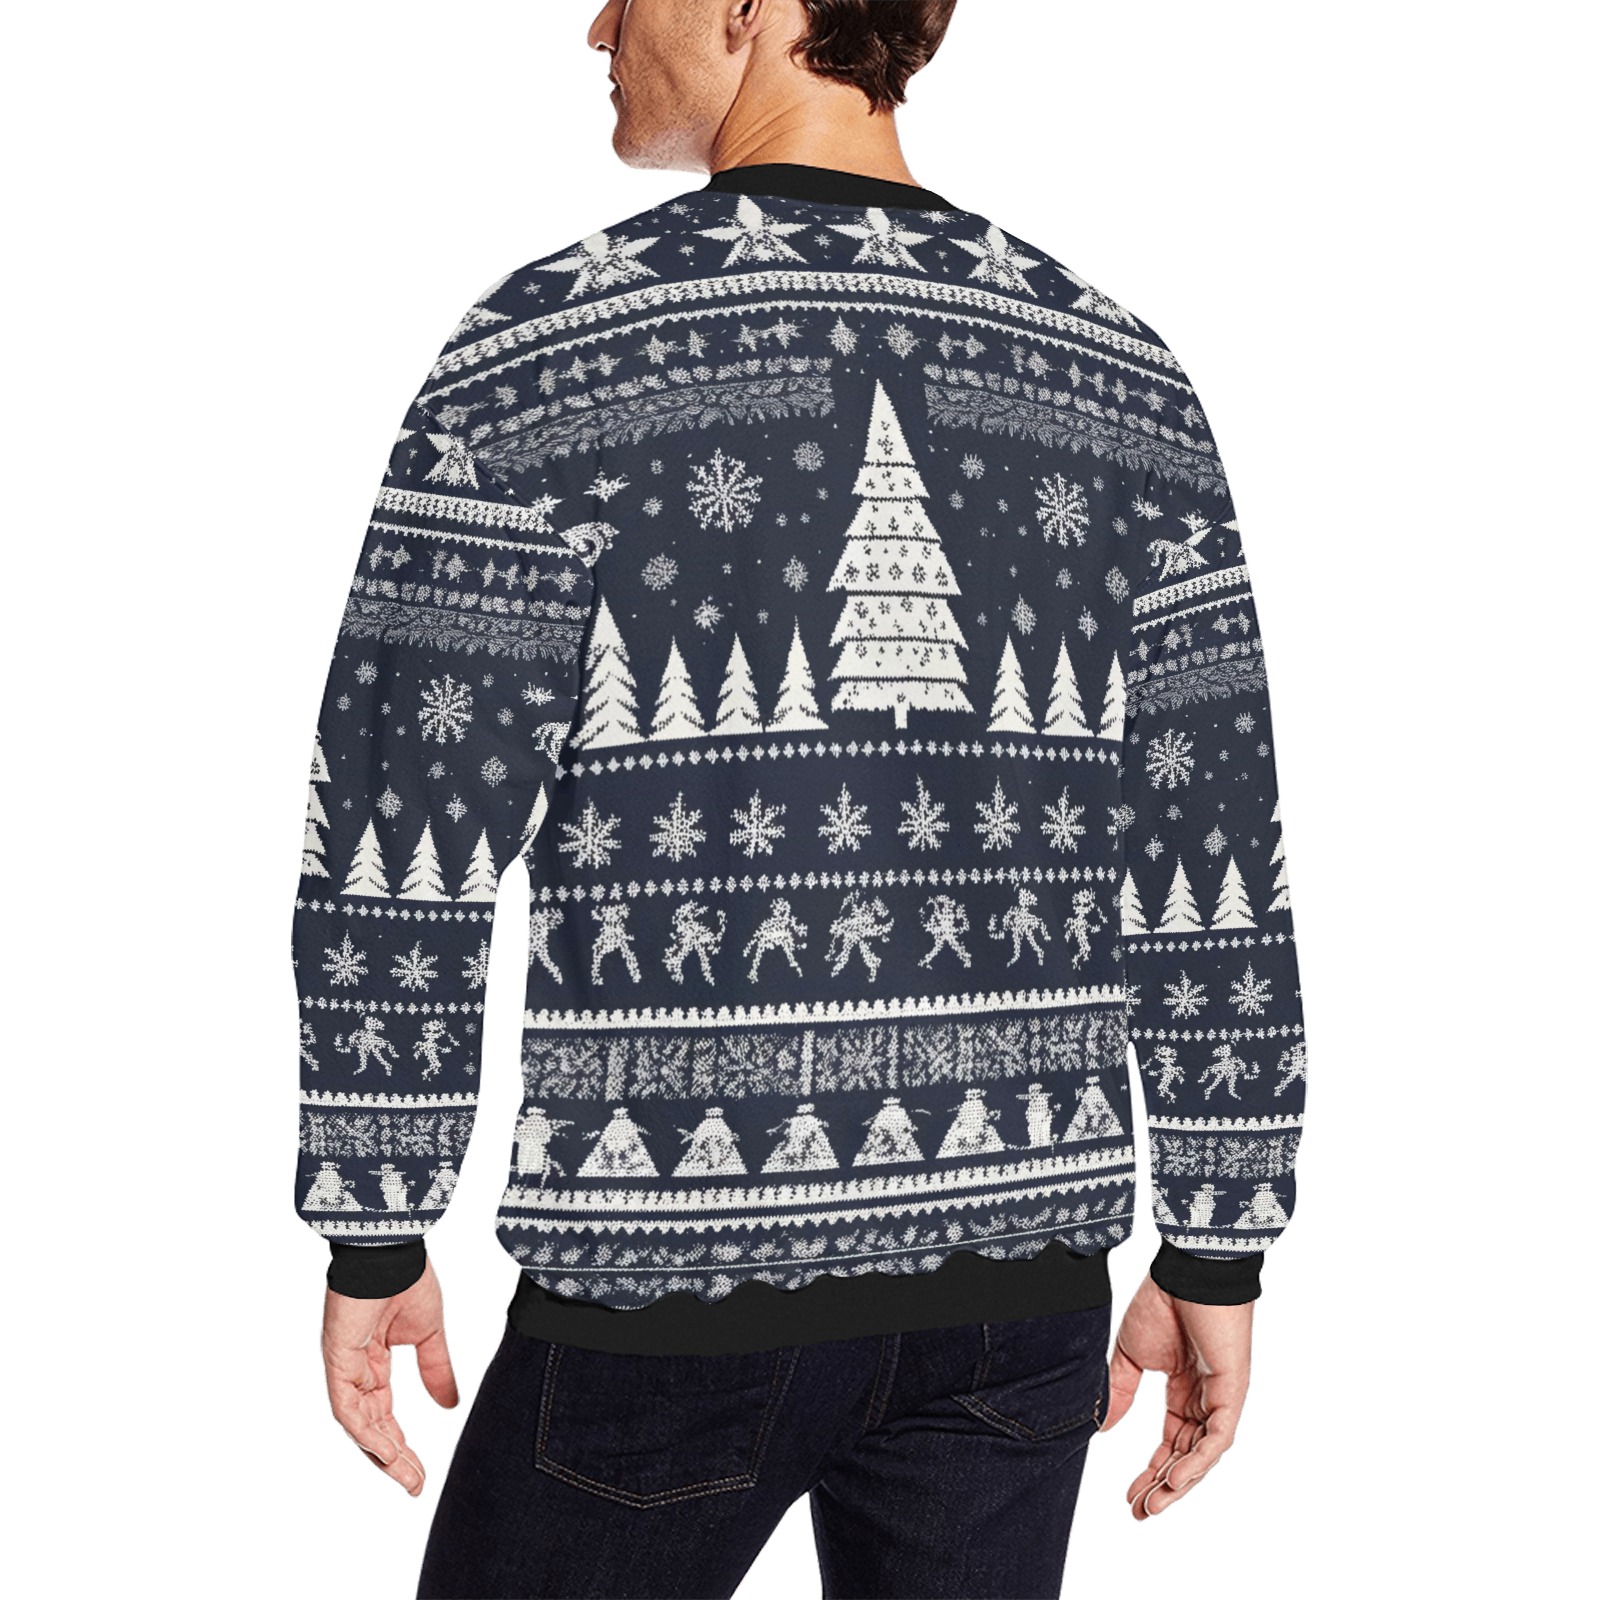 Fantasy enchanted forest witch winter pattern. Men's Oversized Fleece Crew Sweatshirt (Model H18)